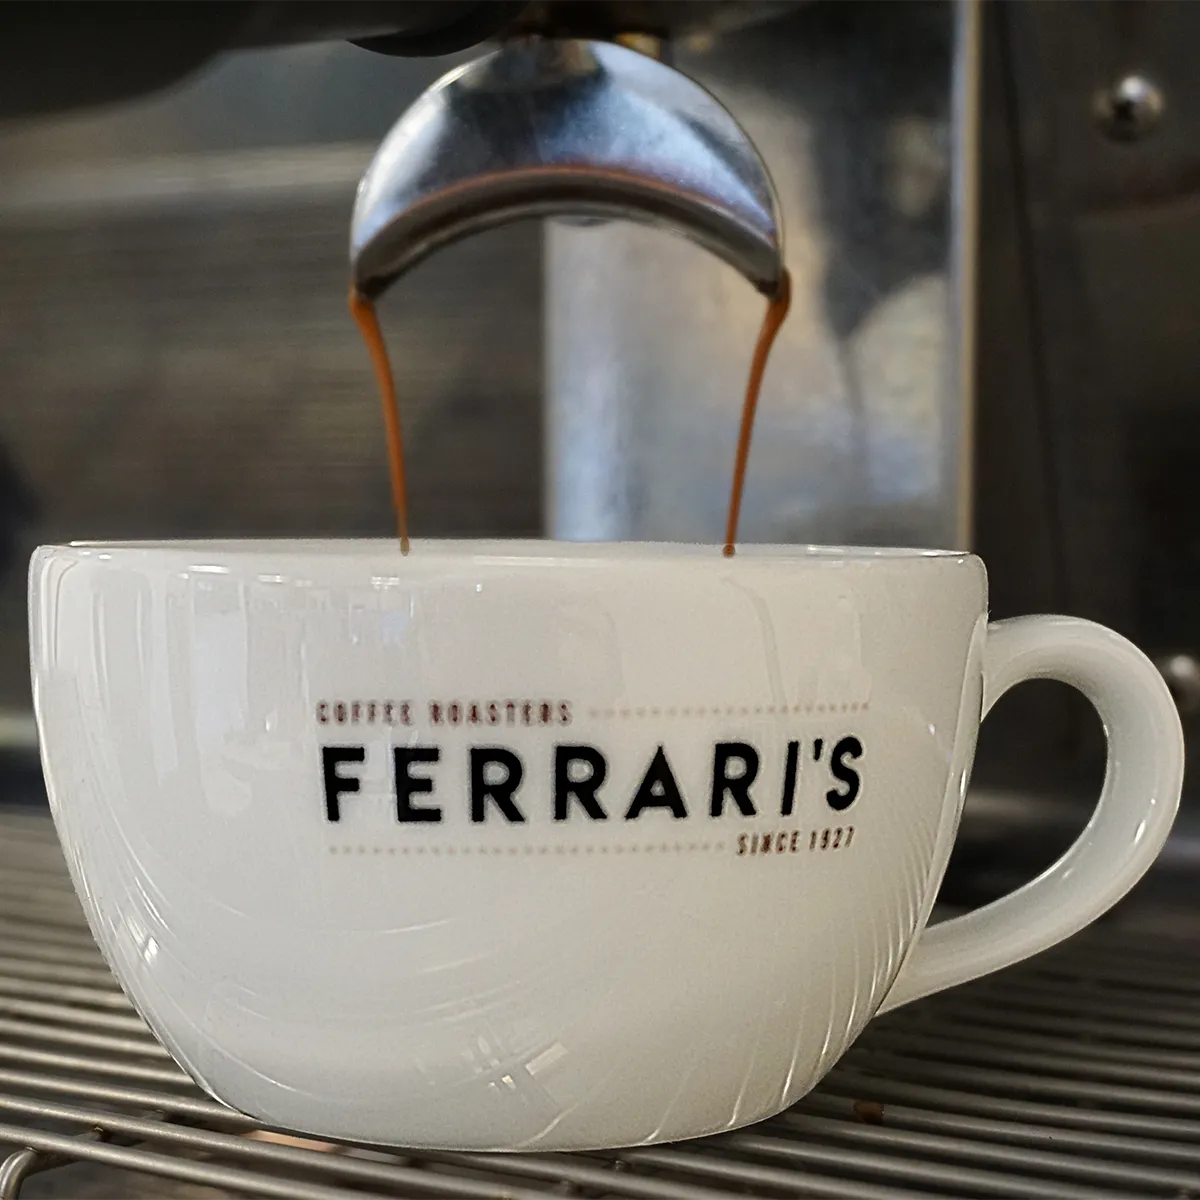 Ferrari's Coffee, White Ceramic Branded Cup, TrustPilot Reviews Section